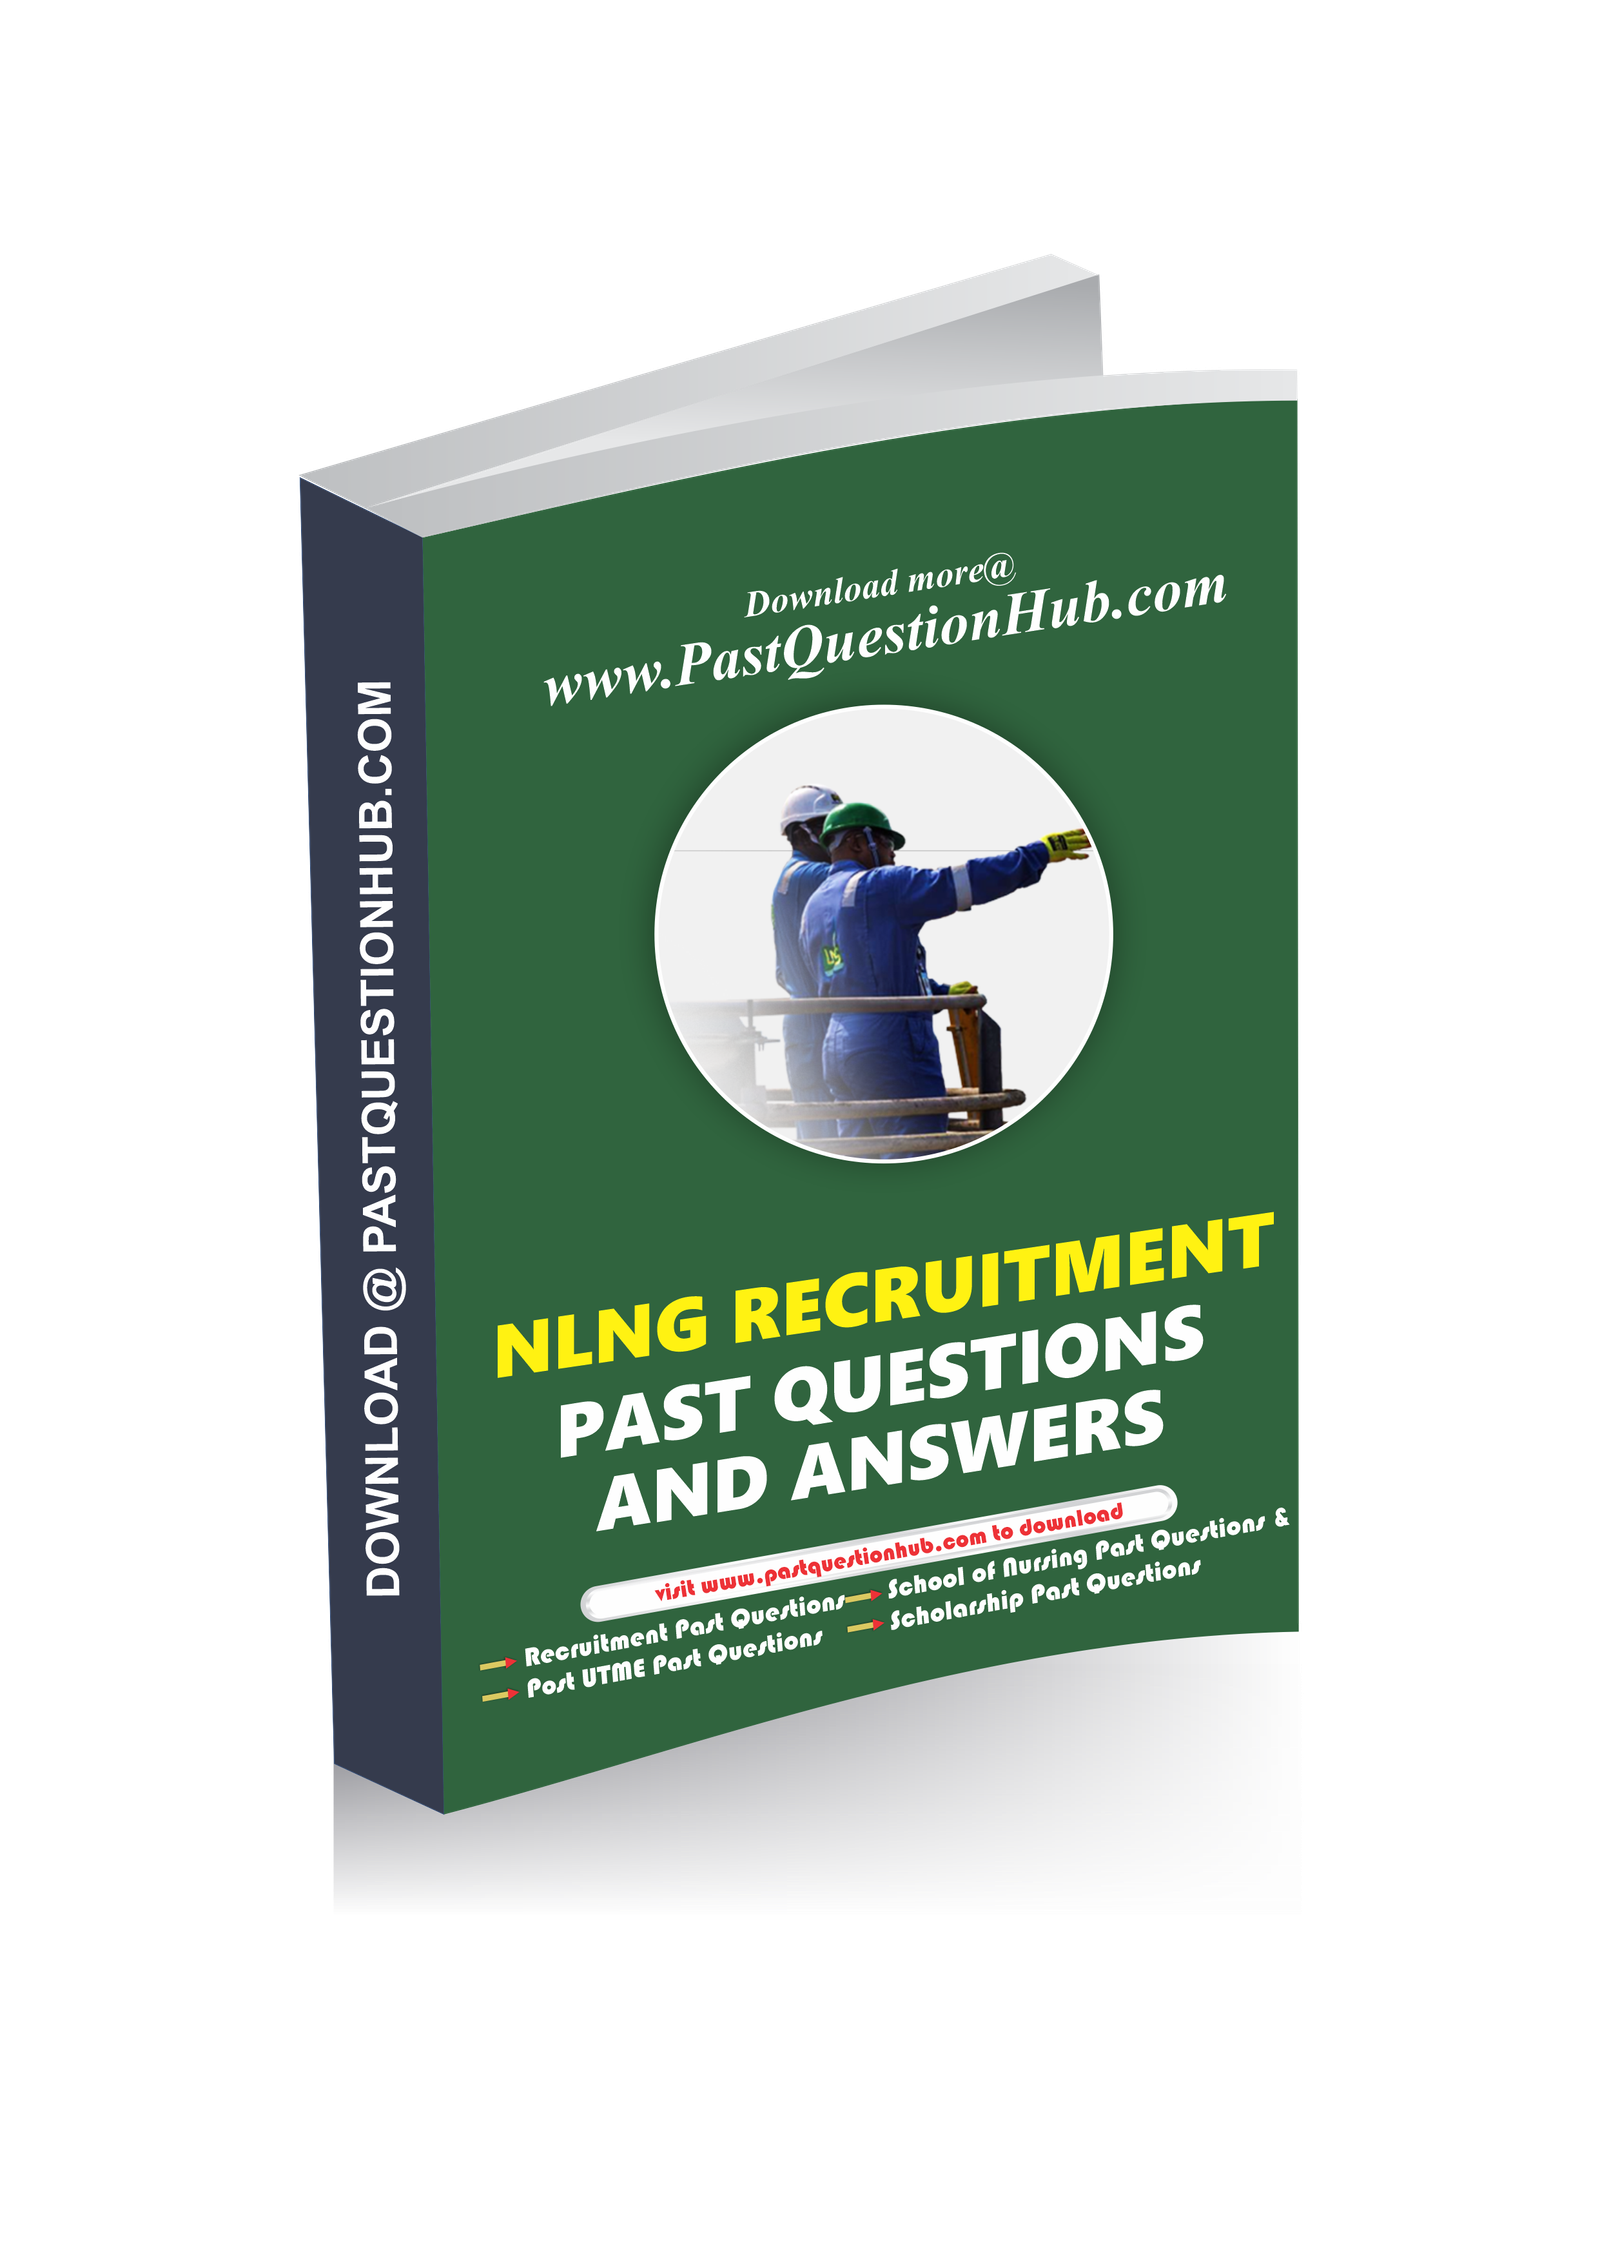 NLNG Recruitment Past Questions